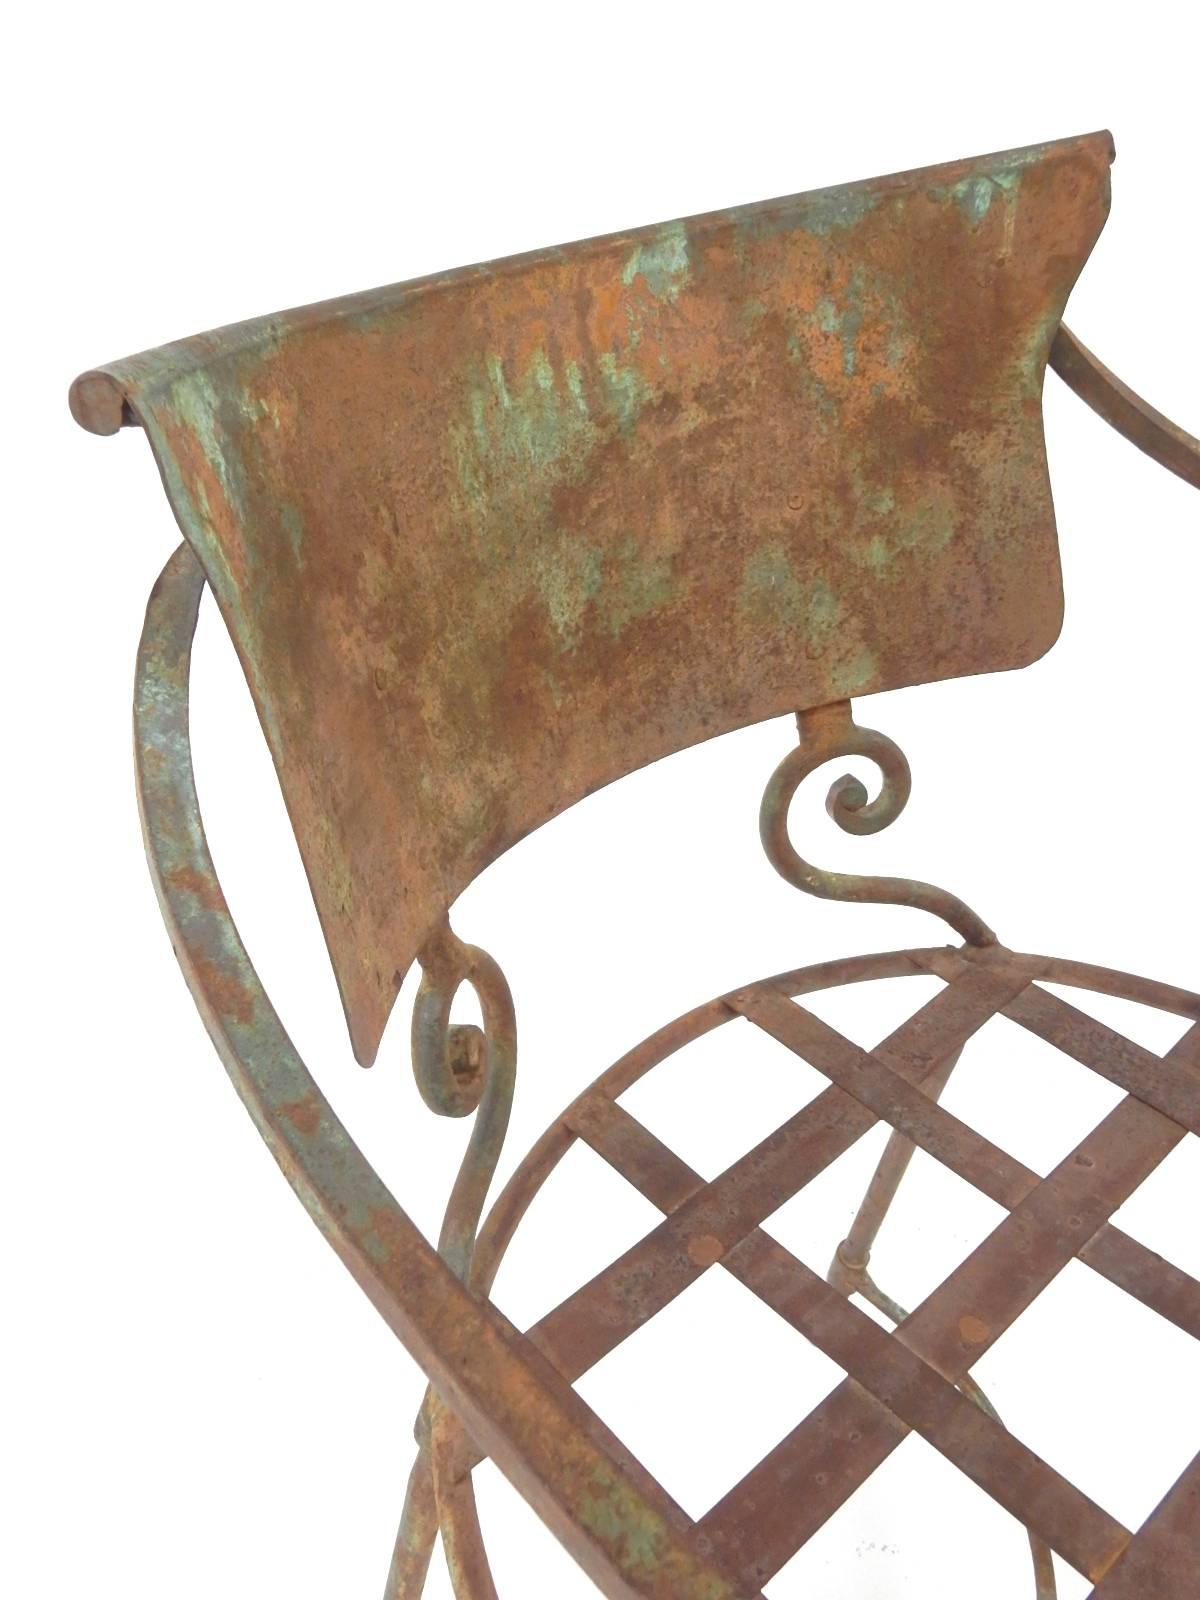 French Art Nouveau Sculptural Iron Garden Patio Chairs 1